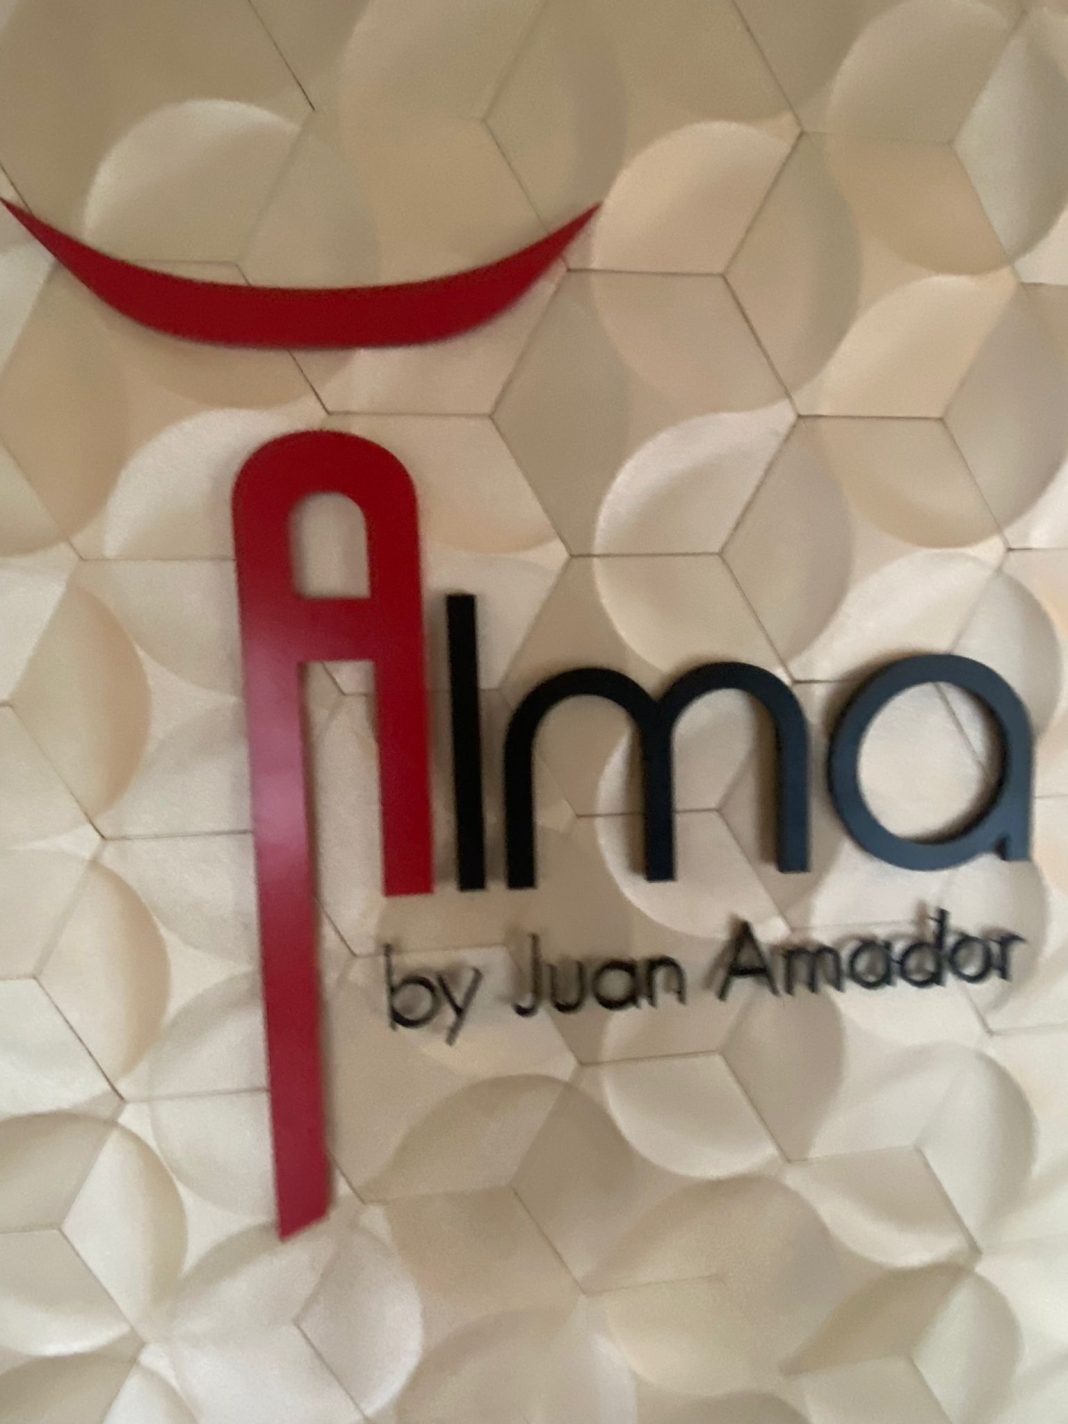 alma by juan amador restaurant acrylic signage